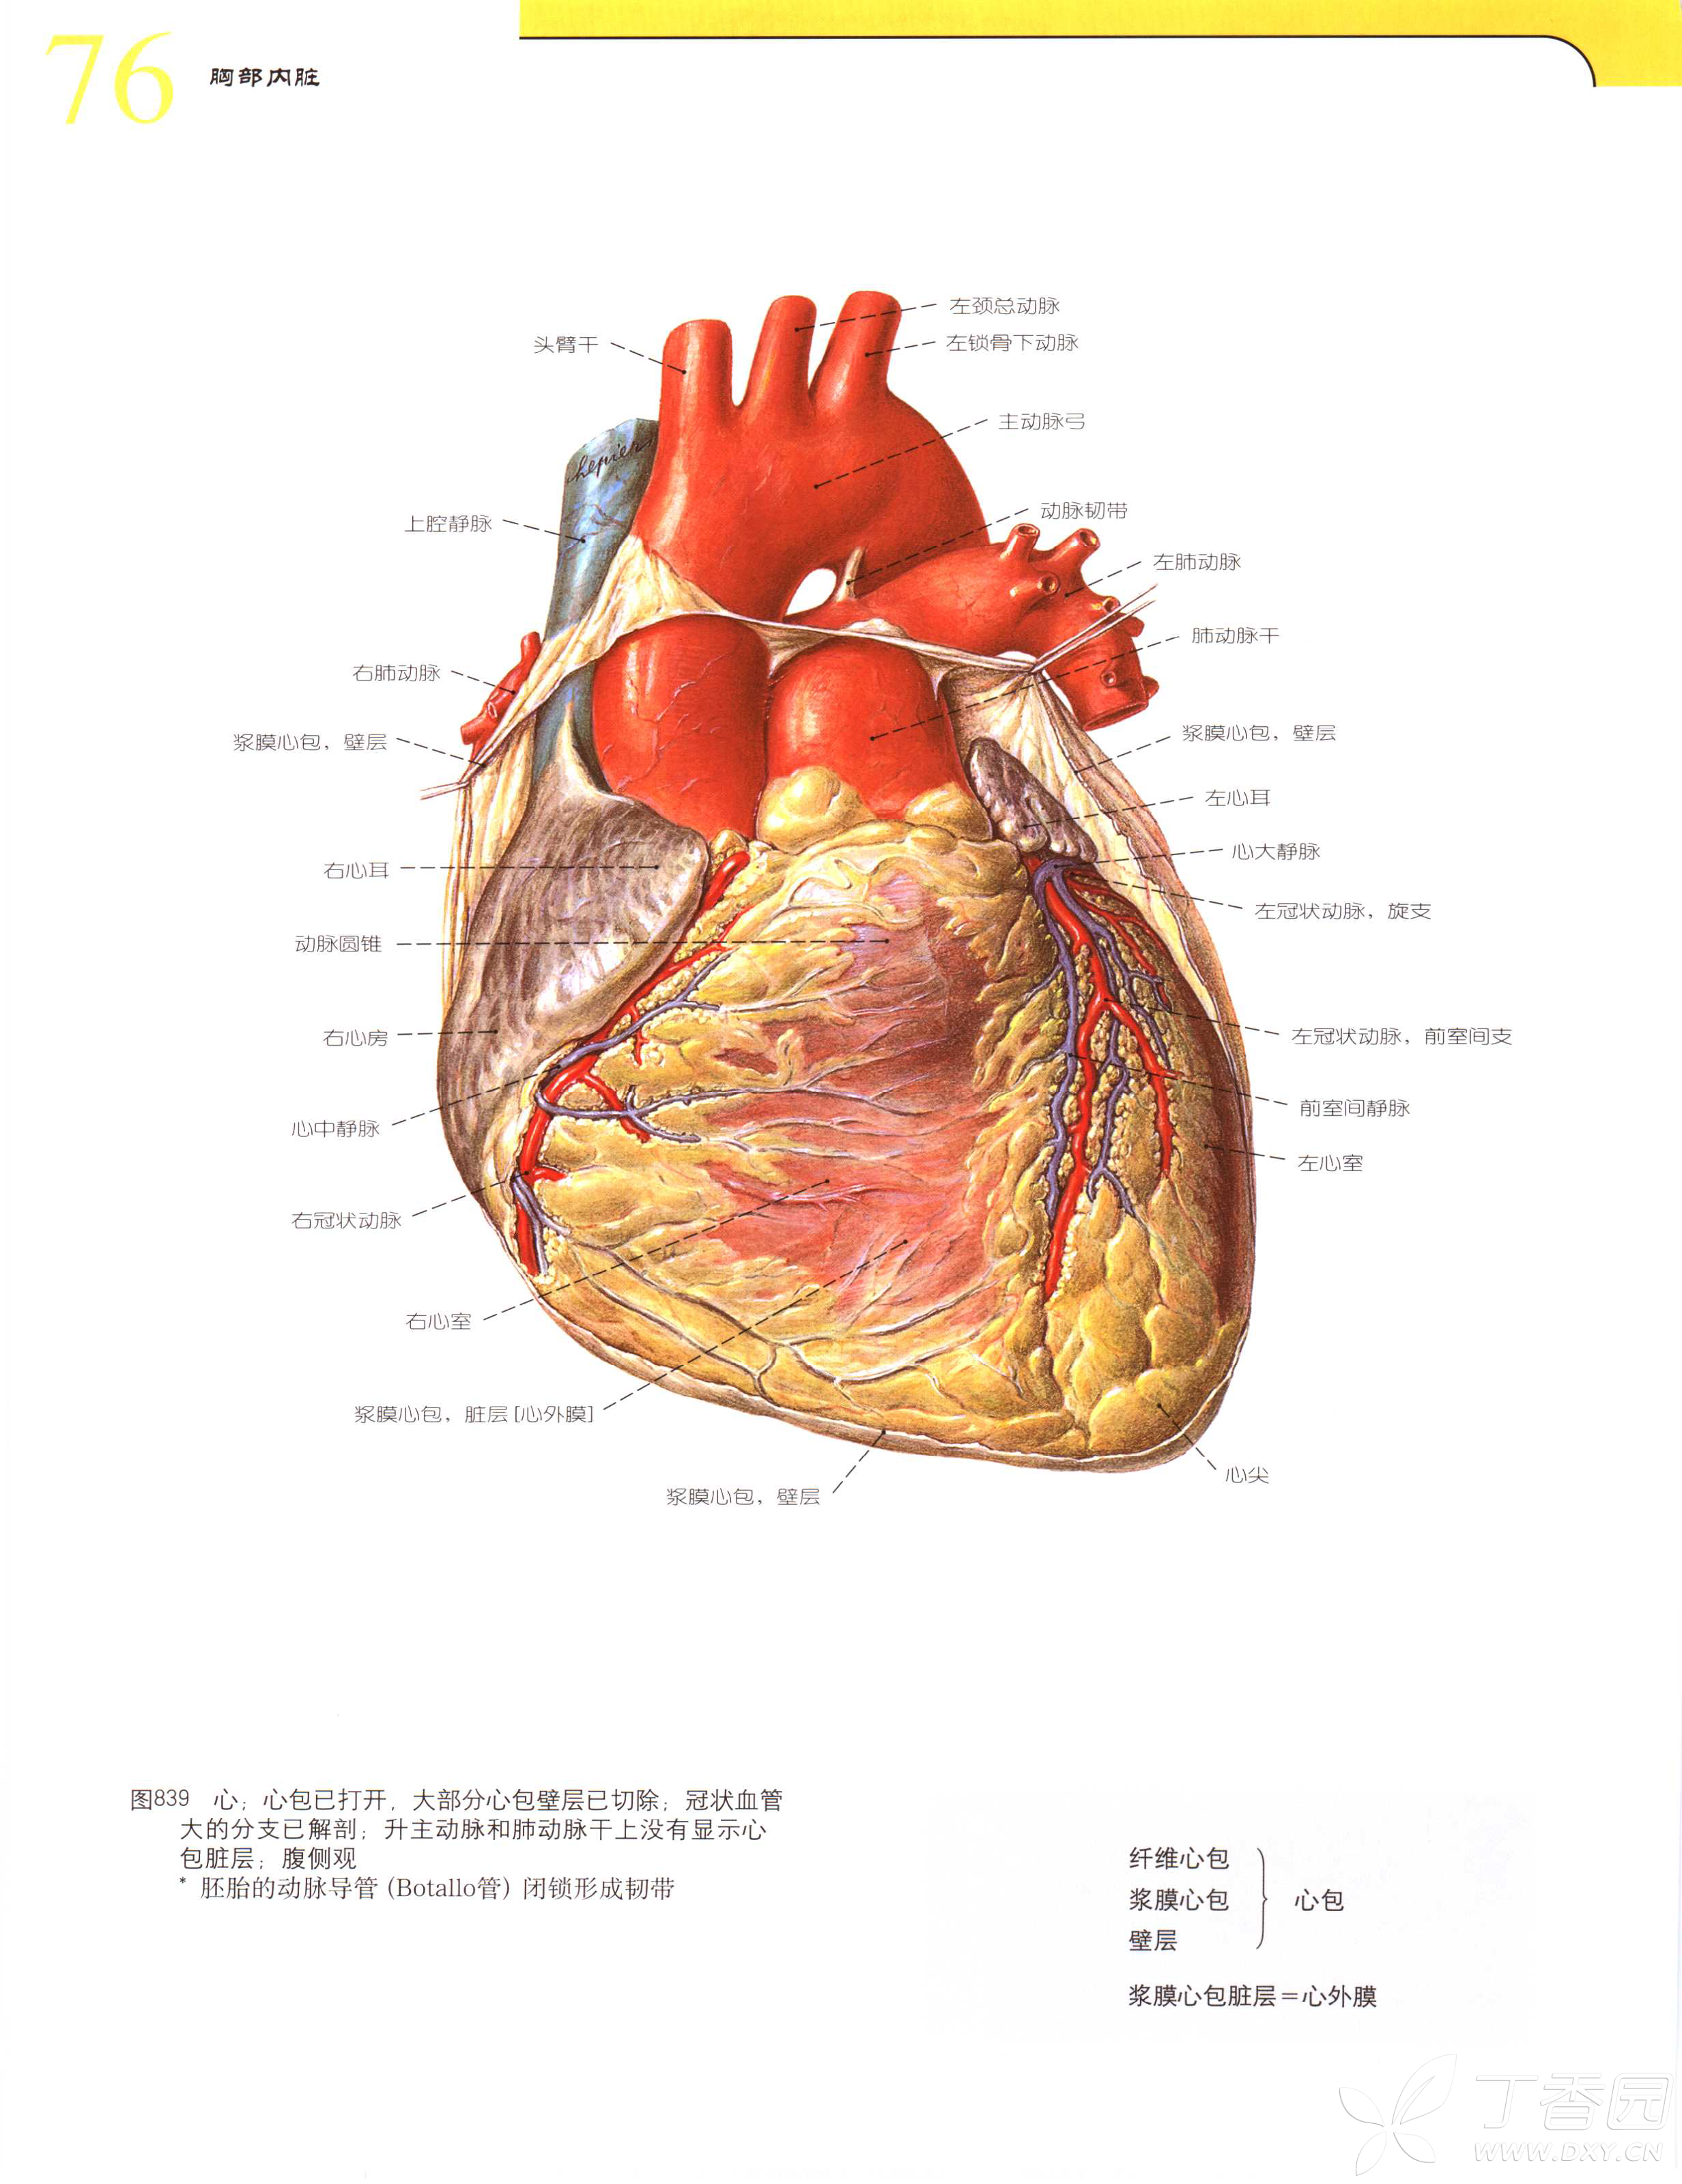 sobotta人体解剖学图谱(第21版)(下卷)躯干,内脏,下肢